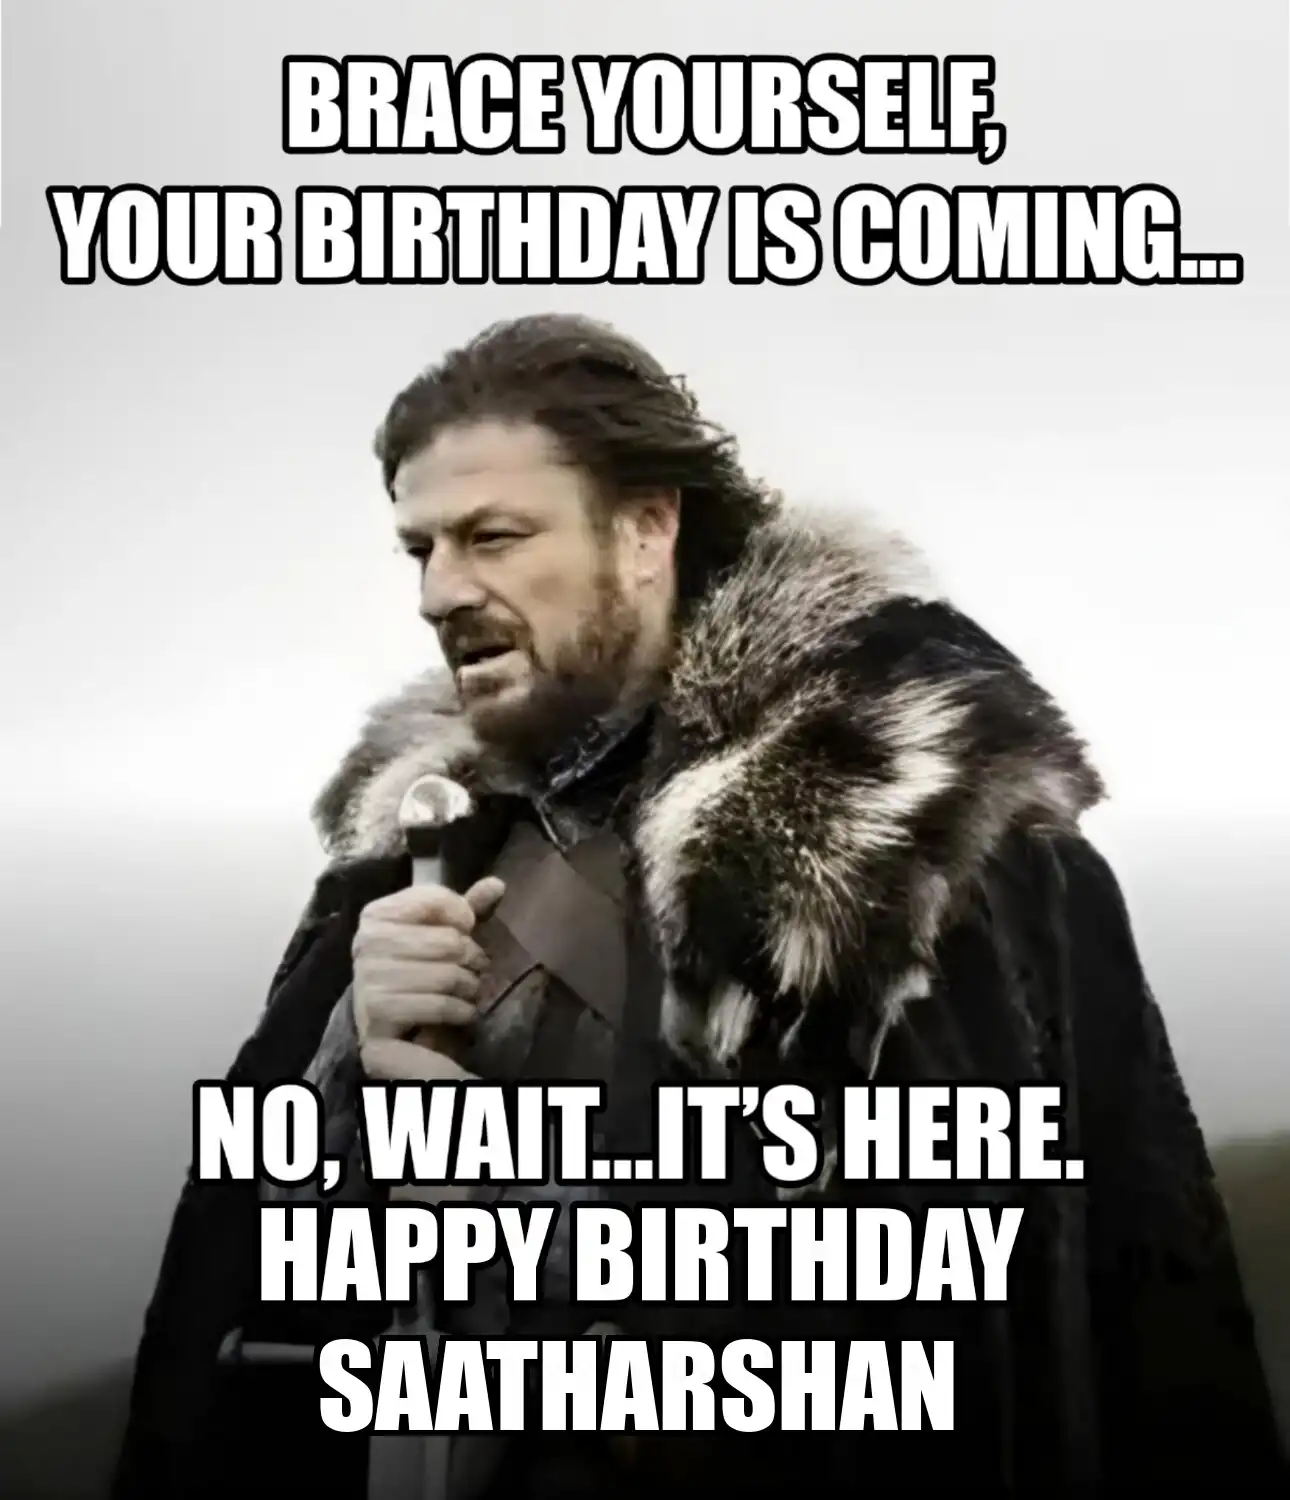 Happy Birthday Saatharshan Brace Yourself Your Birthday Is Coming Meme